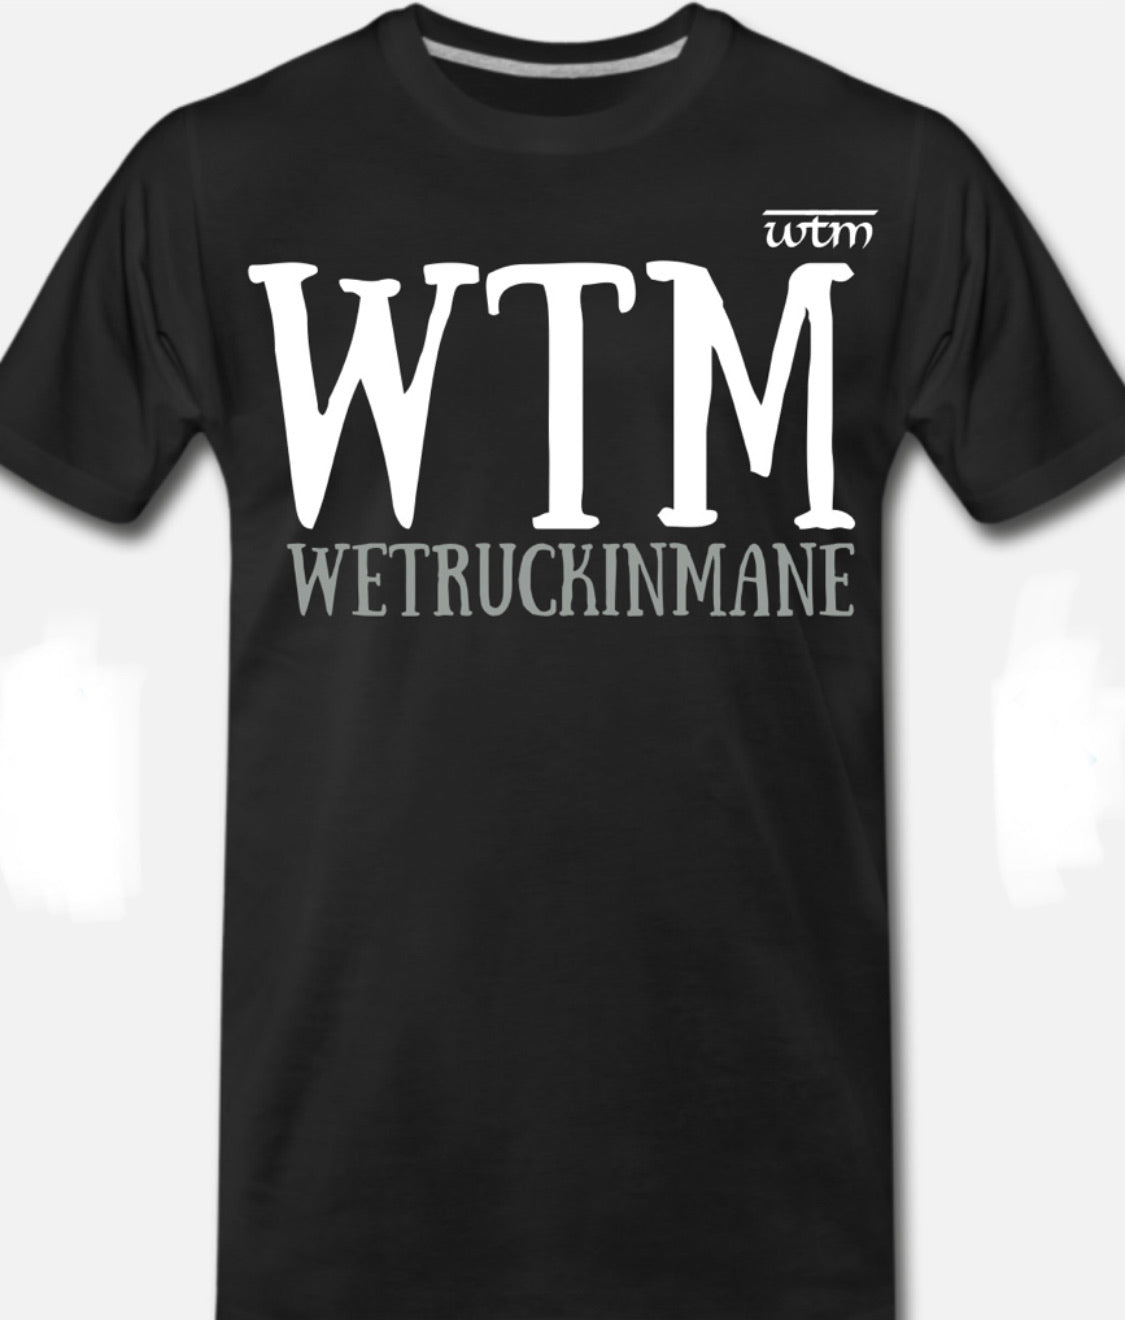 Black and Gray short sleeve “WTM” Shirt